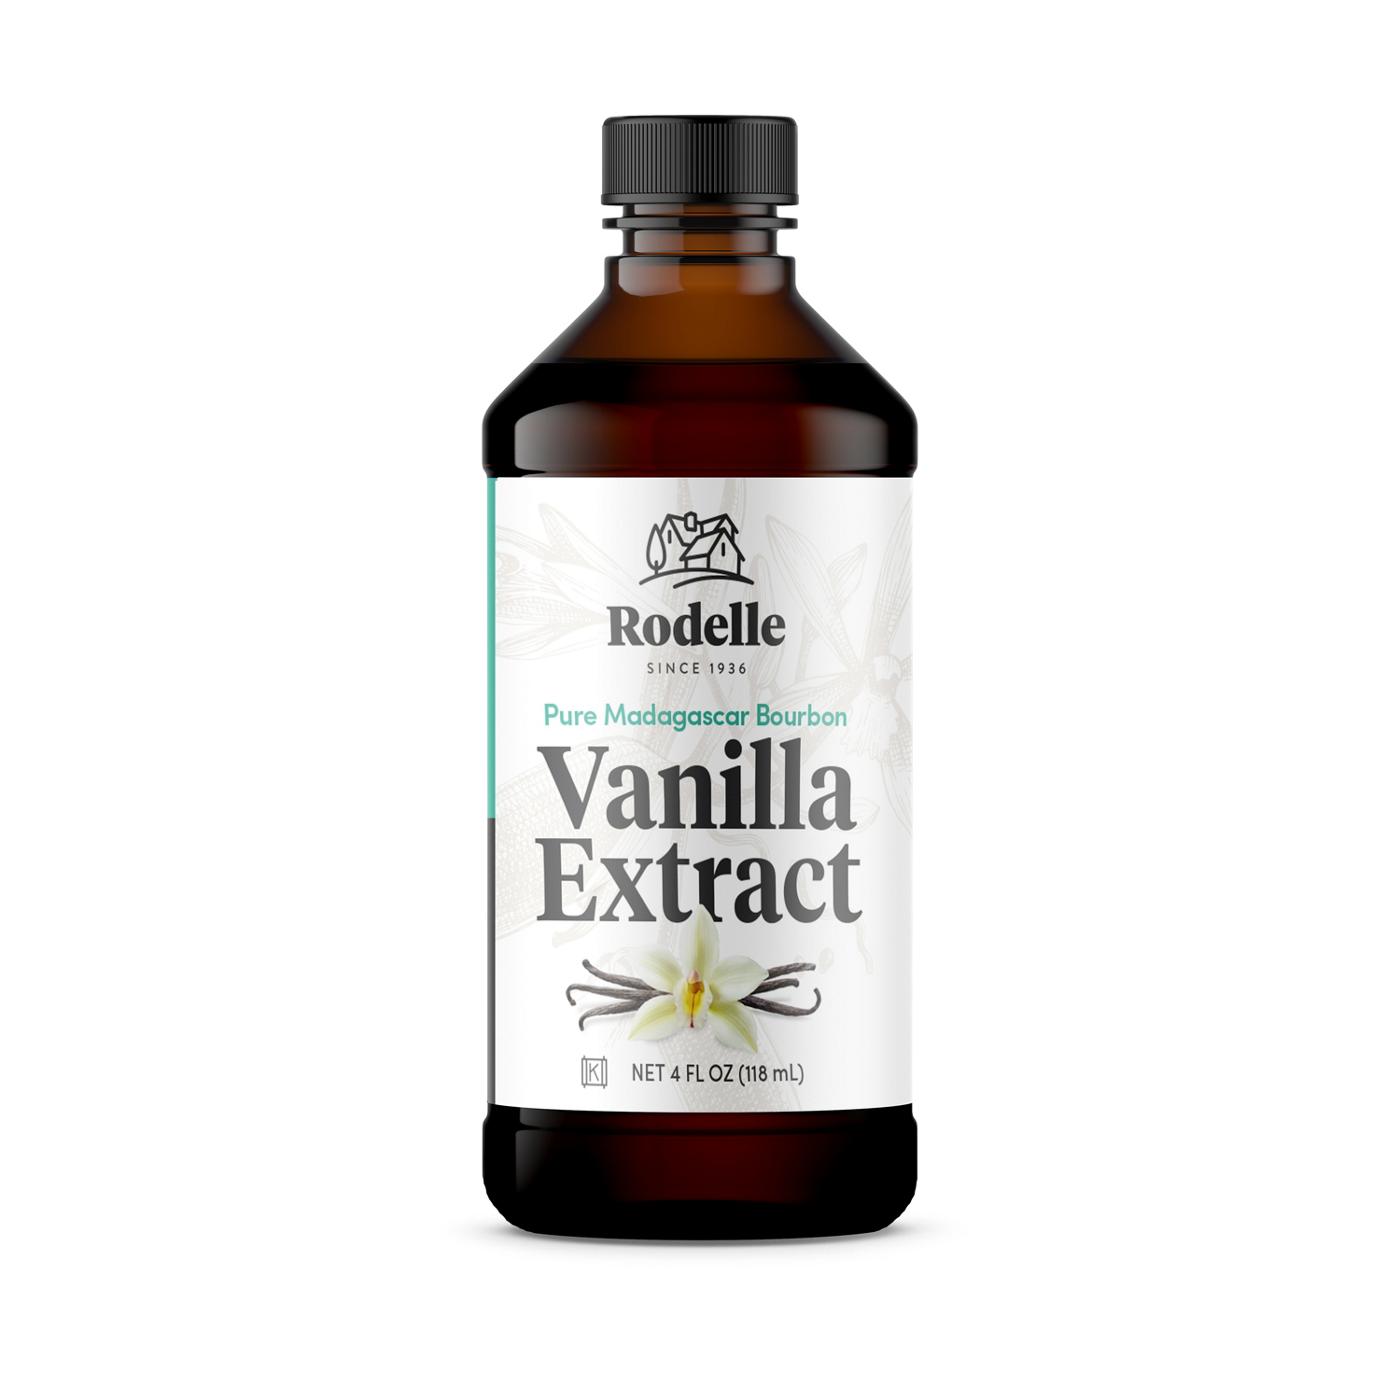 Rodelle Pure Madagascar Bourbon Vanilla Extract; image 1 of 5